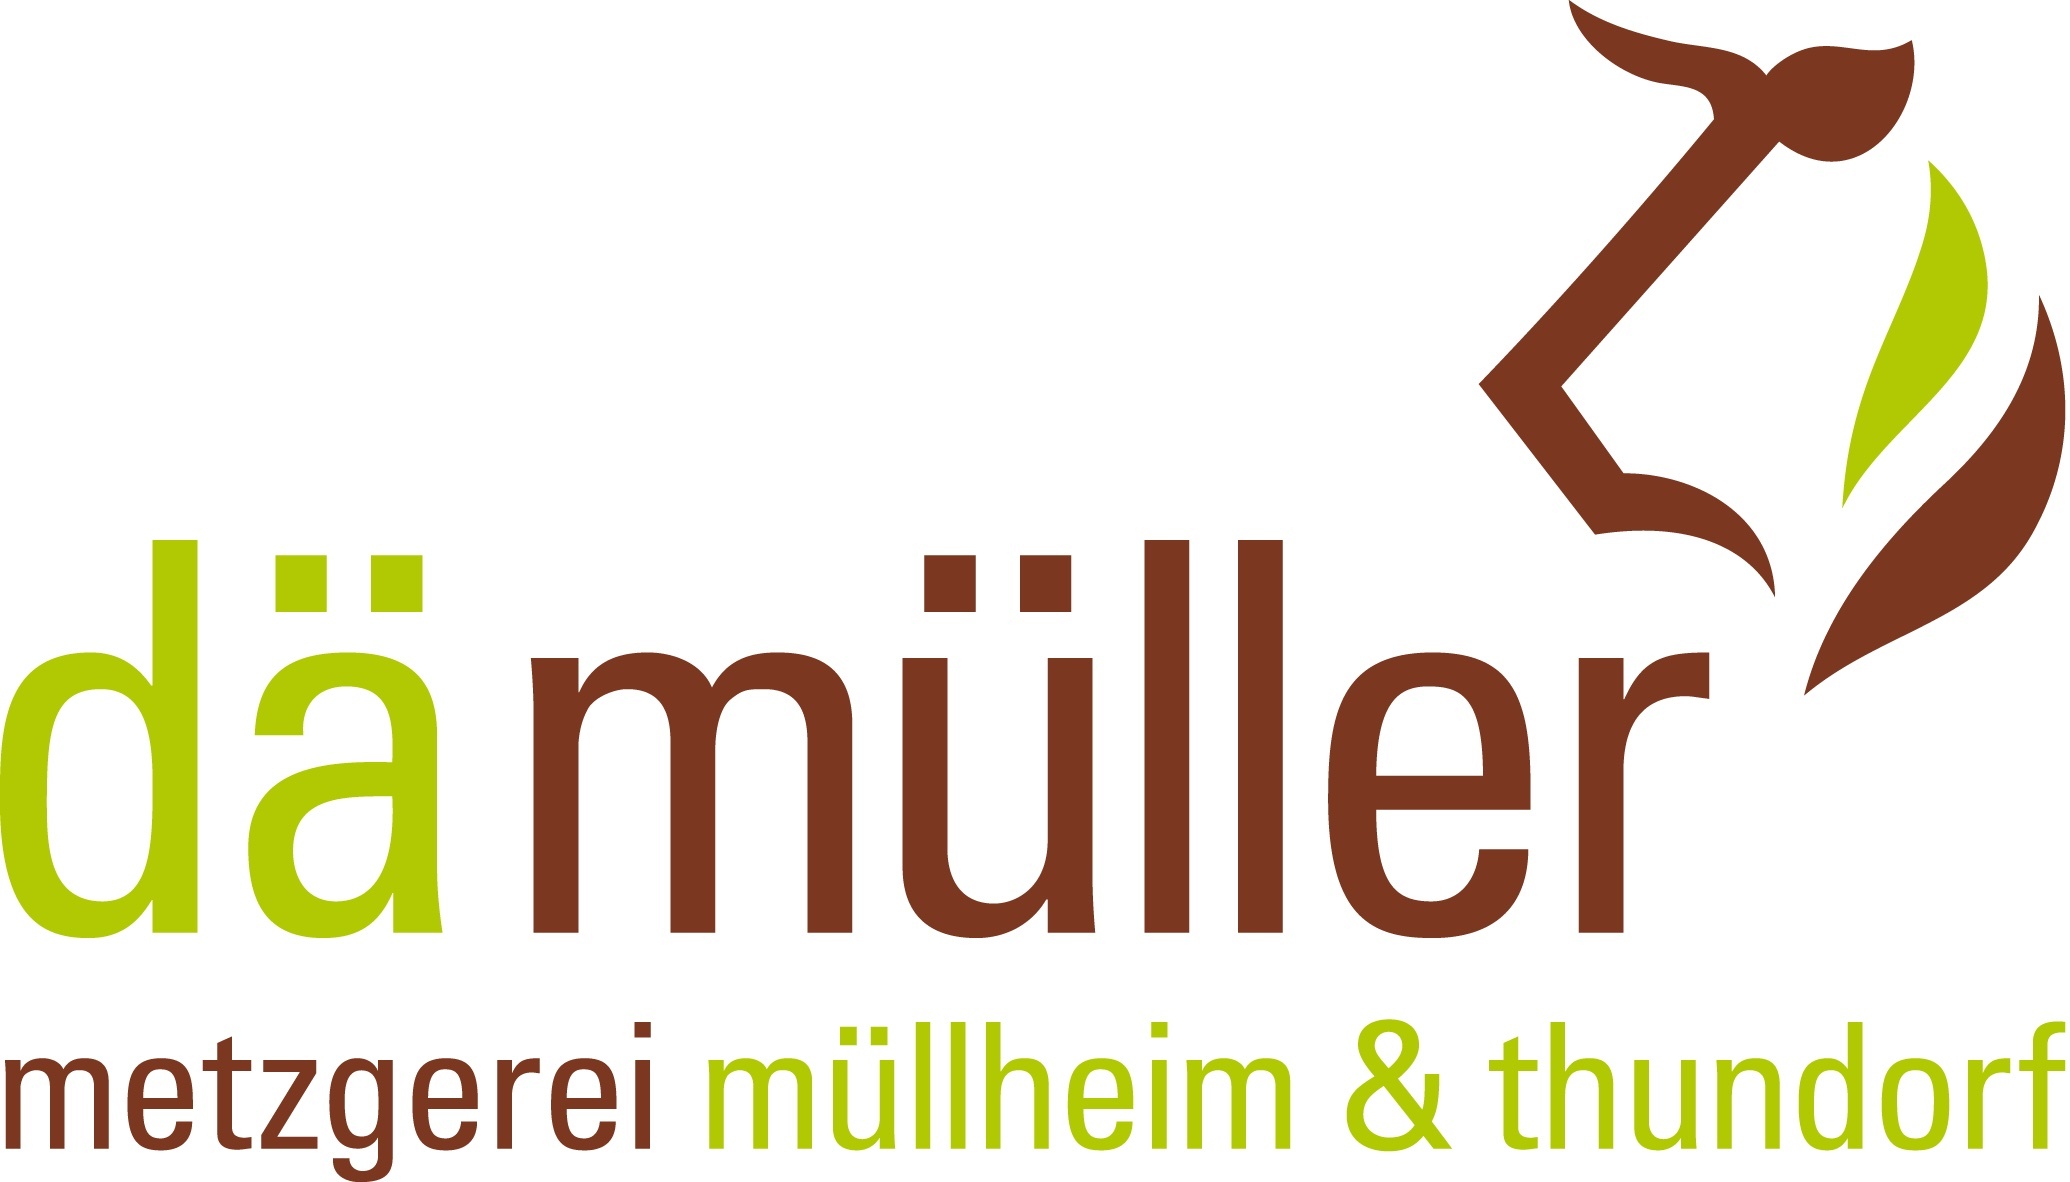 mueller_metzg_muellh_thund_logo_v_rgb.jpg